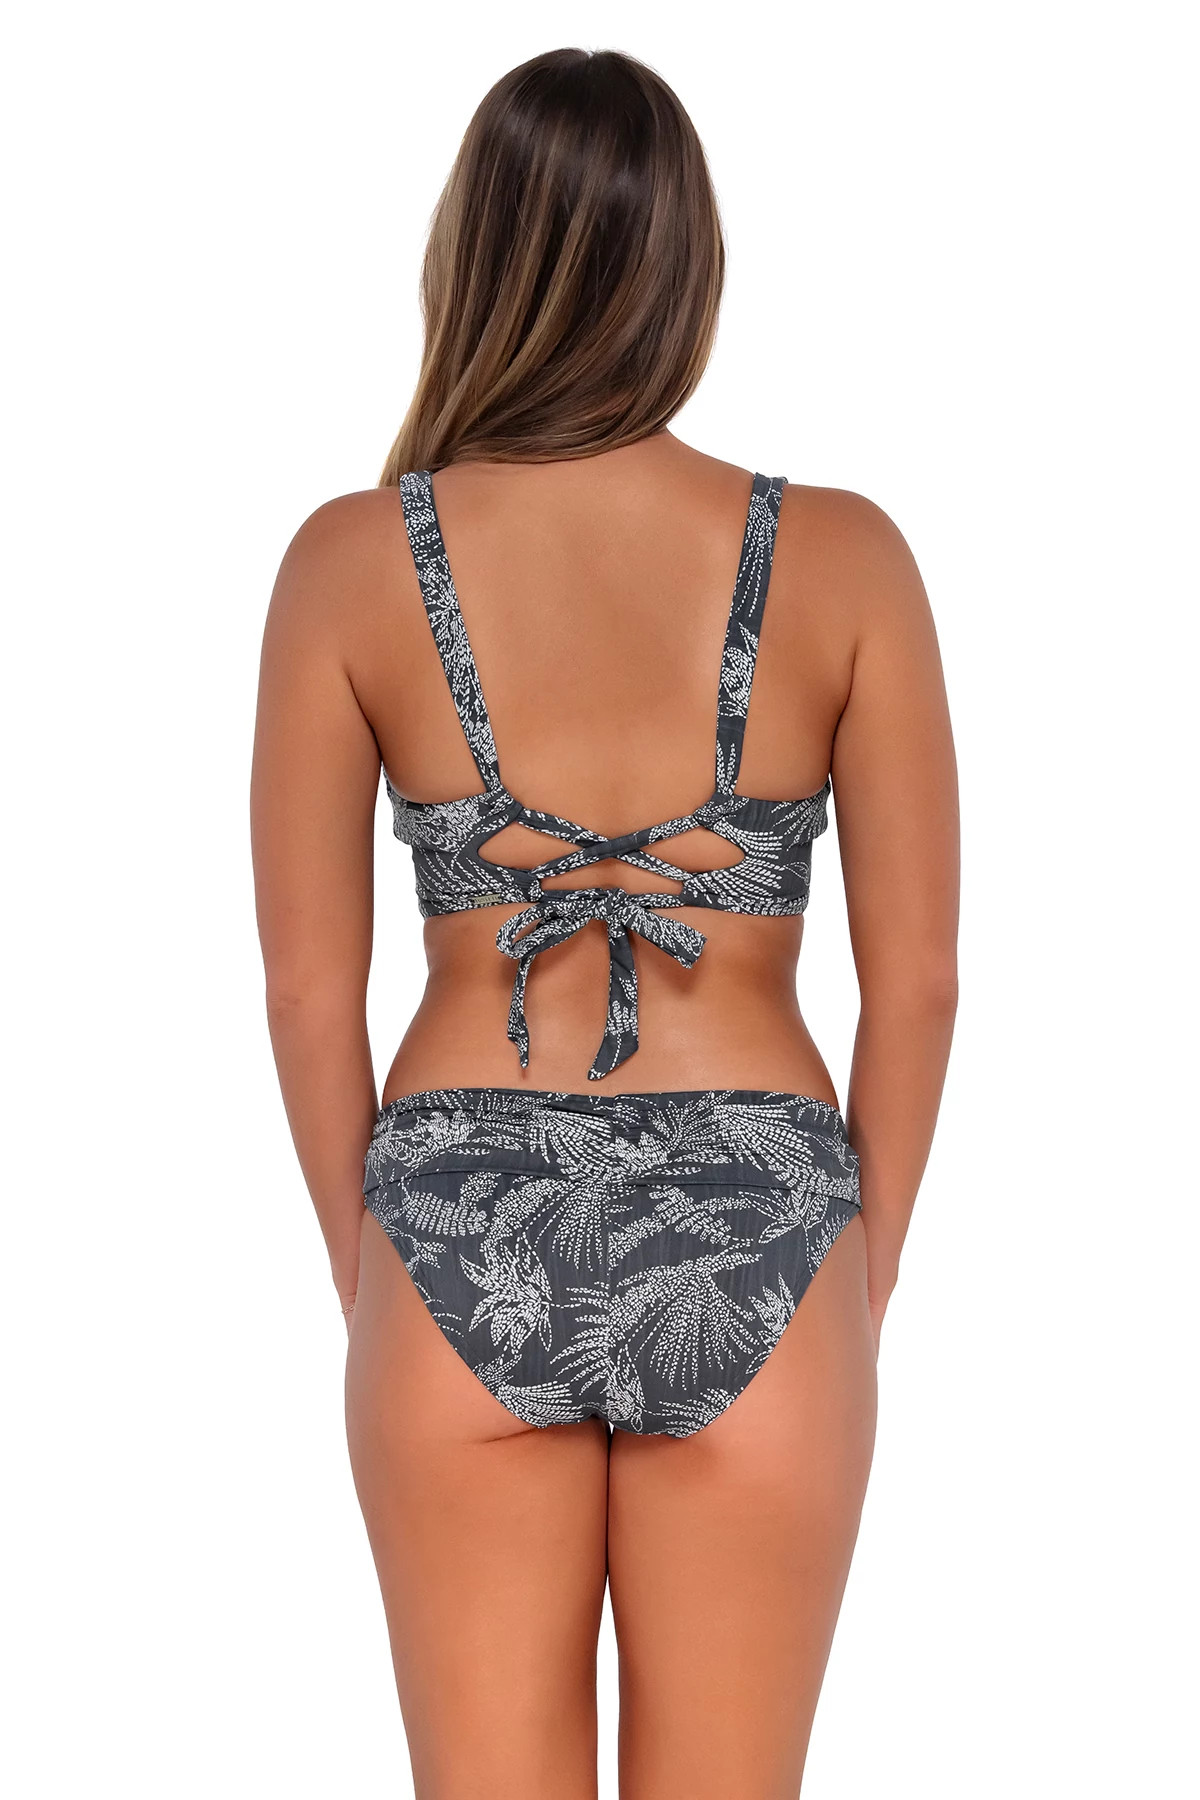 FANFARE SEAGRASS TEXTURE Elsie Underwire Bikini Top (E-H Cup) image number 2